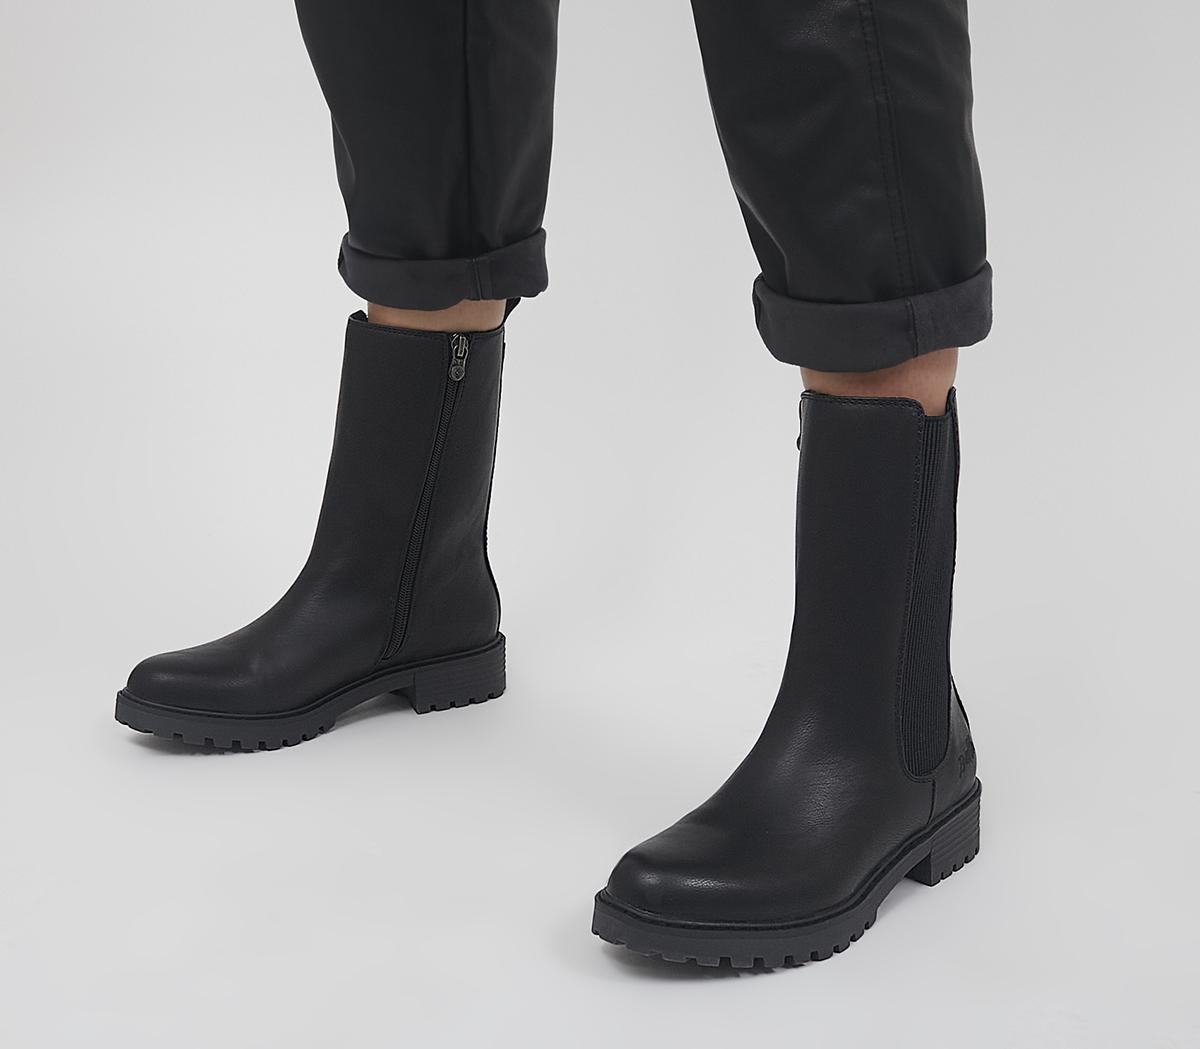 Blowfish Malibu Rebecca High Chelsea Boots Black - Women's Ankle Boots